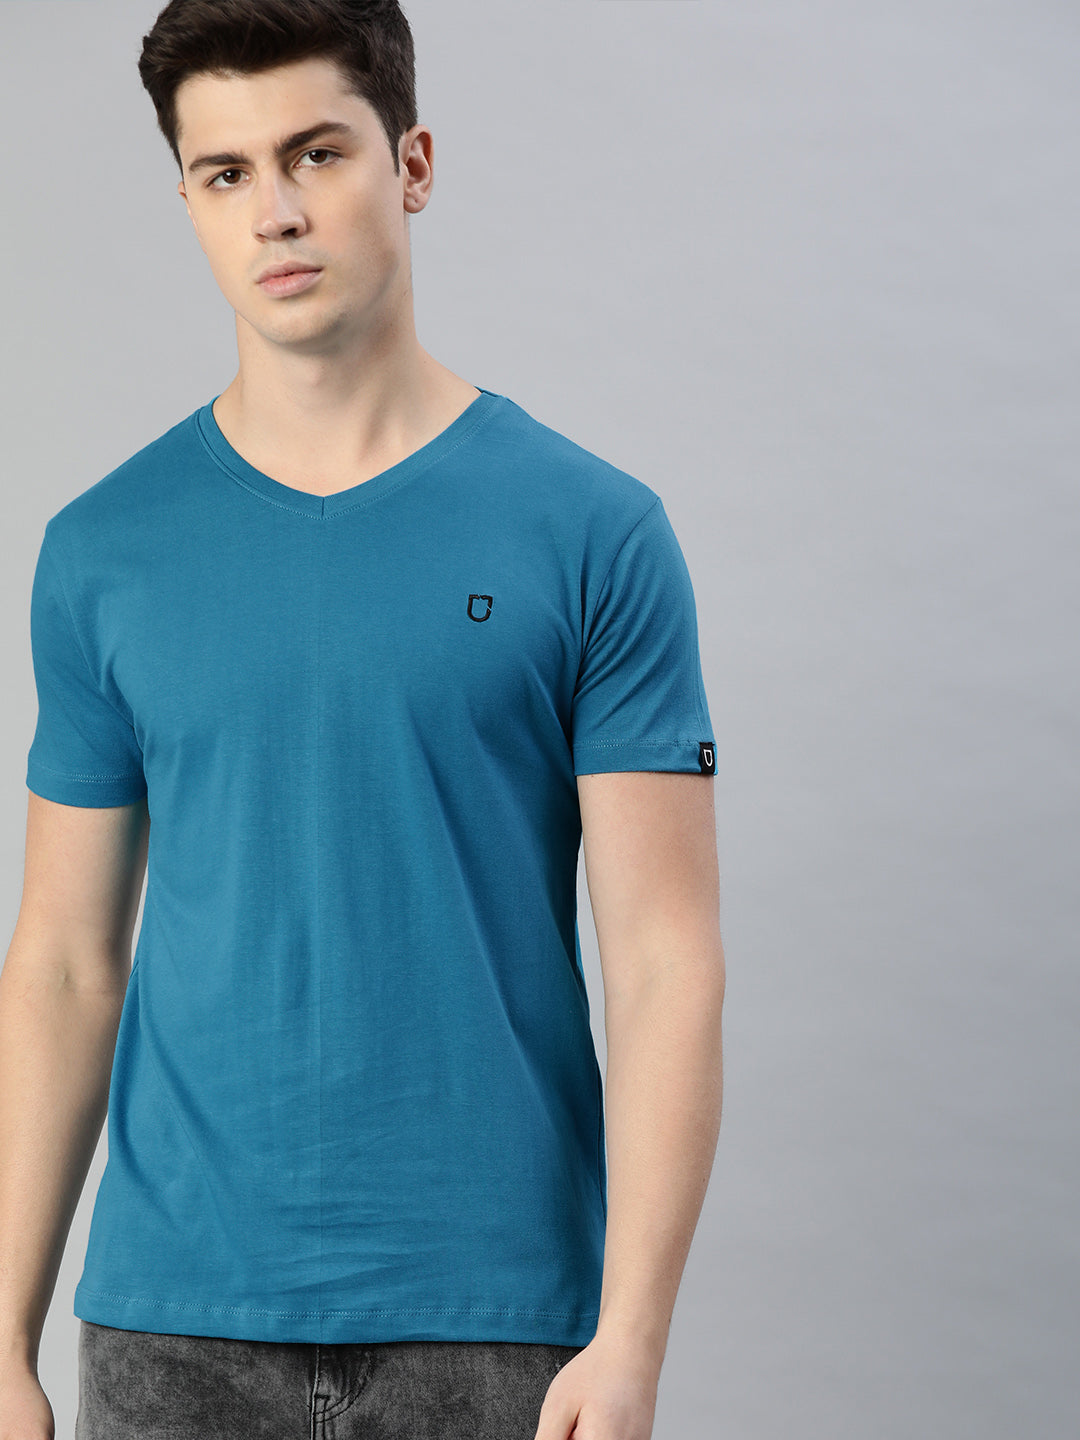 Men's Blue Printed Full Sleeve Slim Fit Cotton T-Shirt